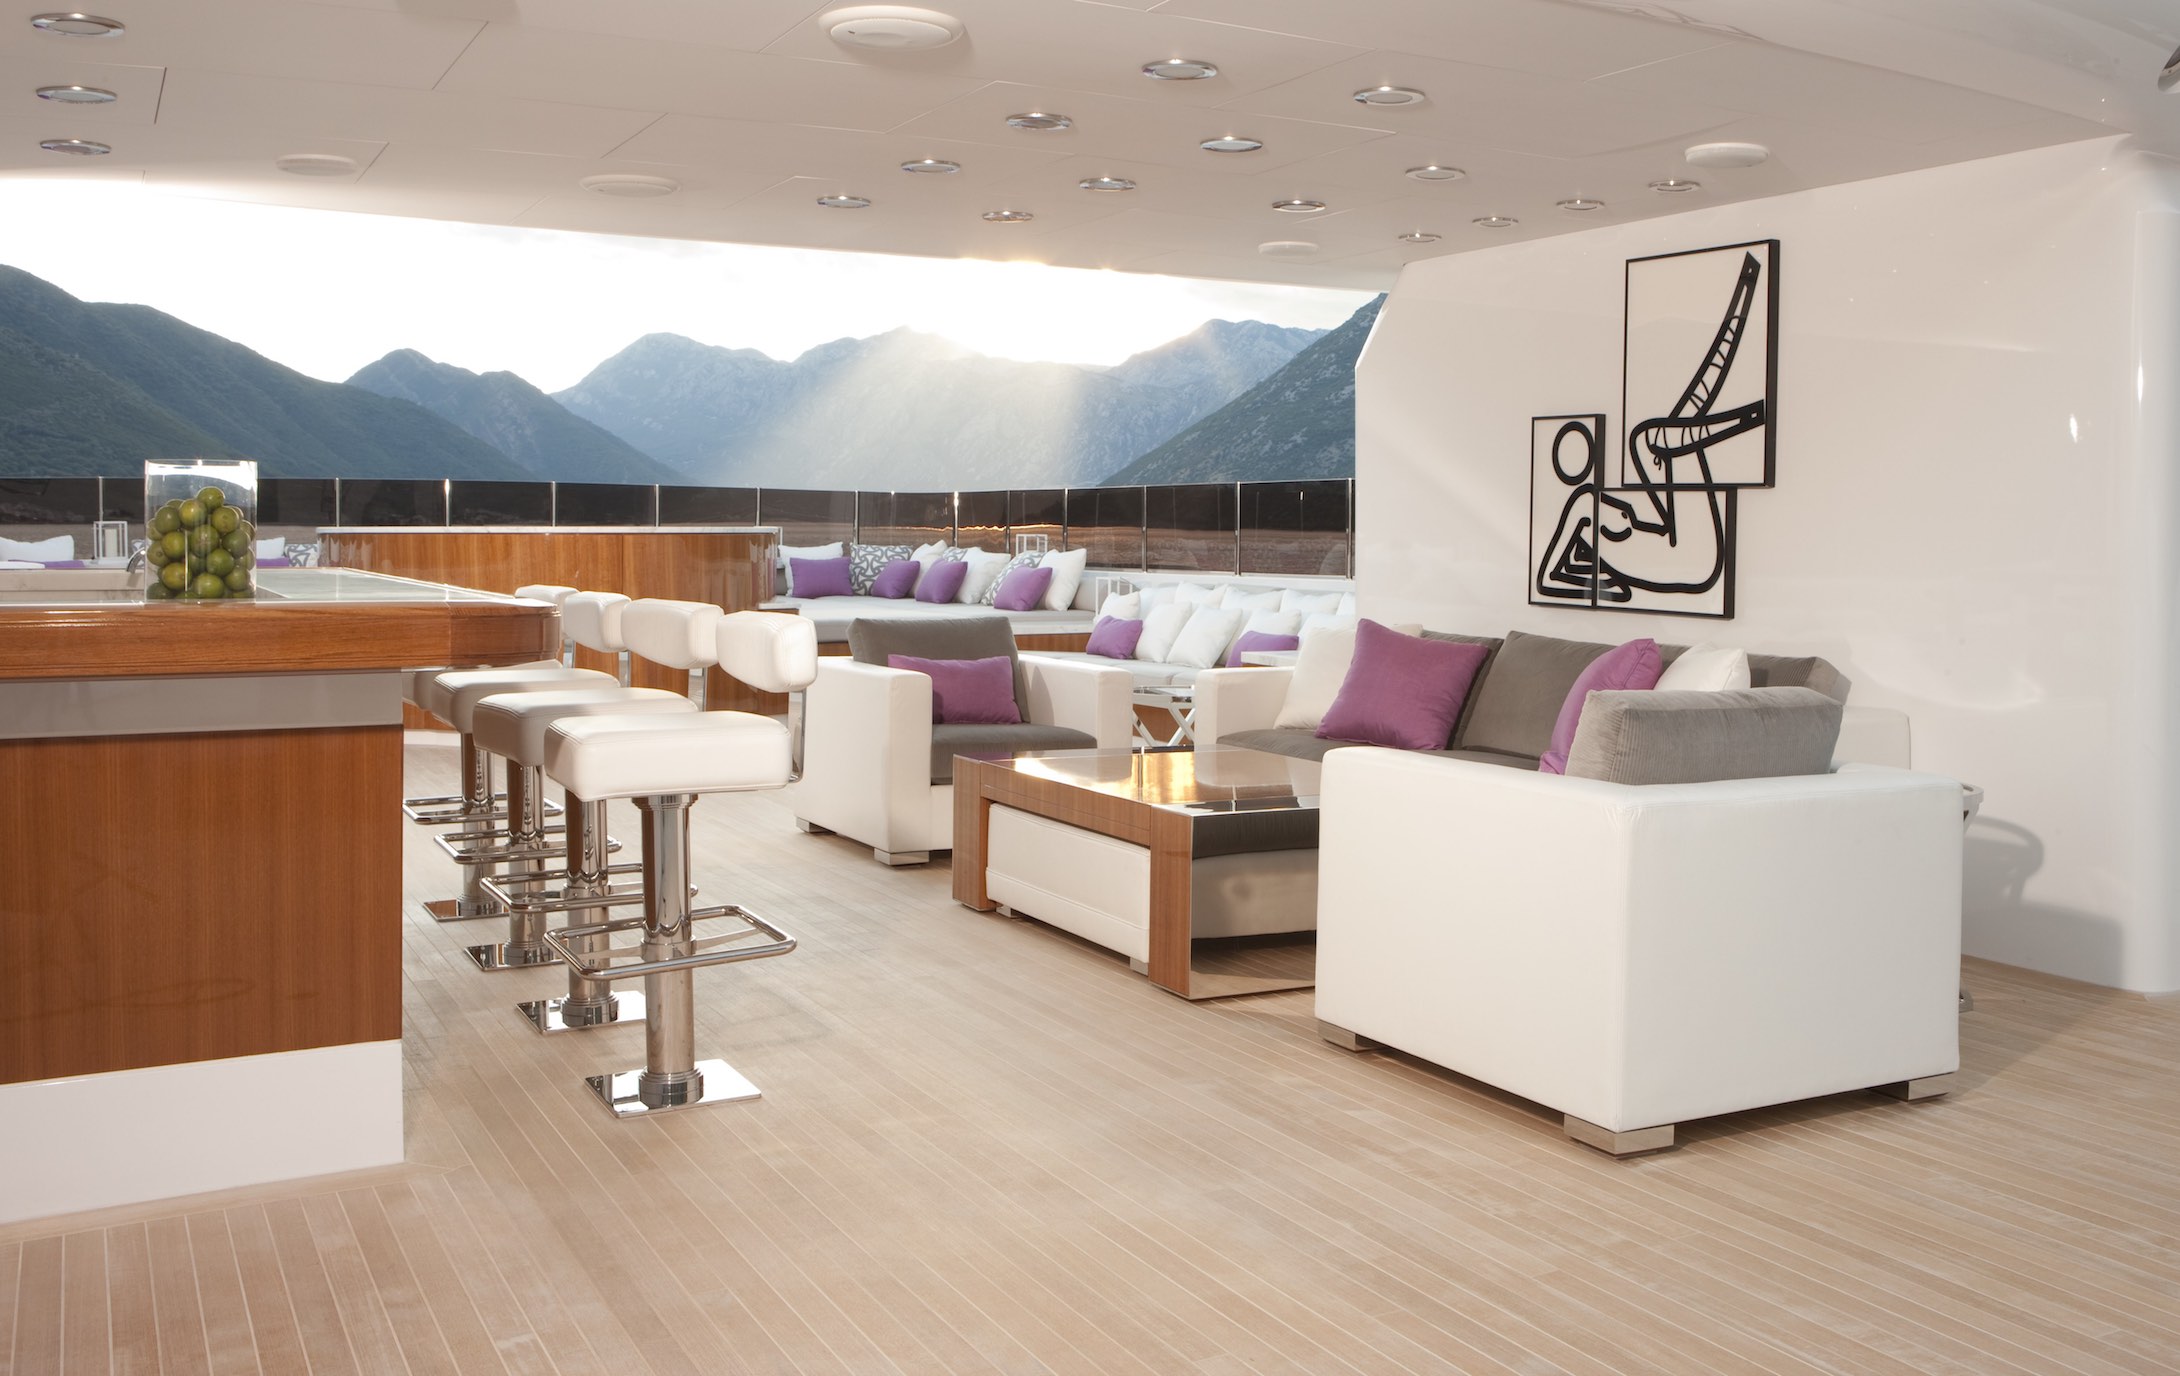 Carpe Diem Luxury Yacht exterior seating with bar